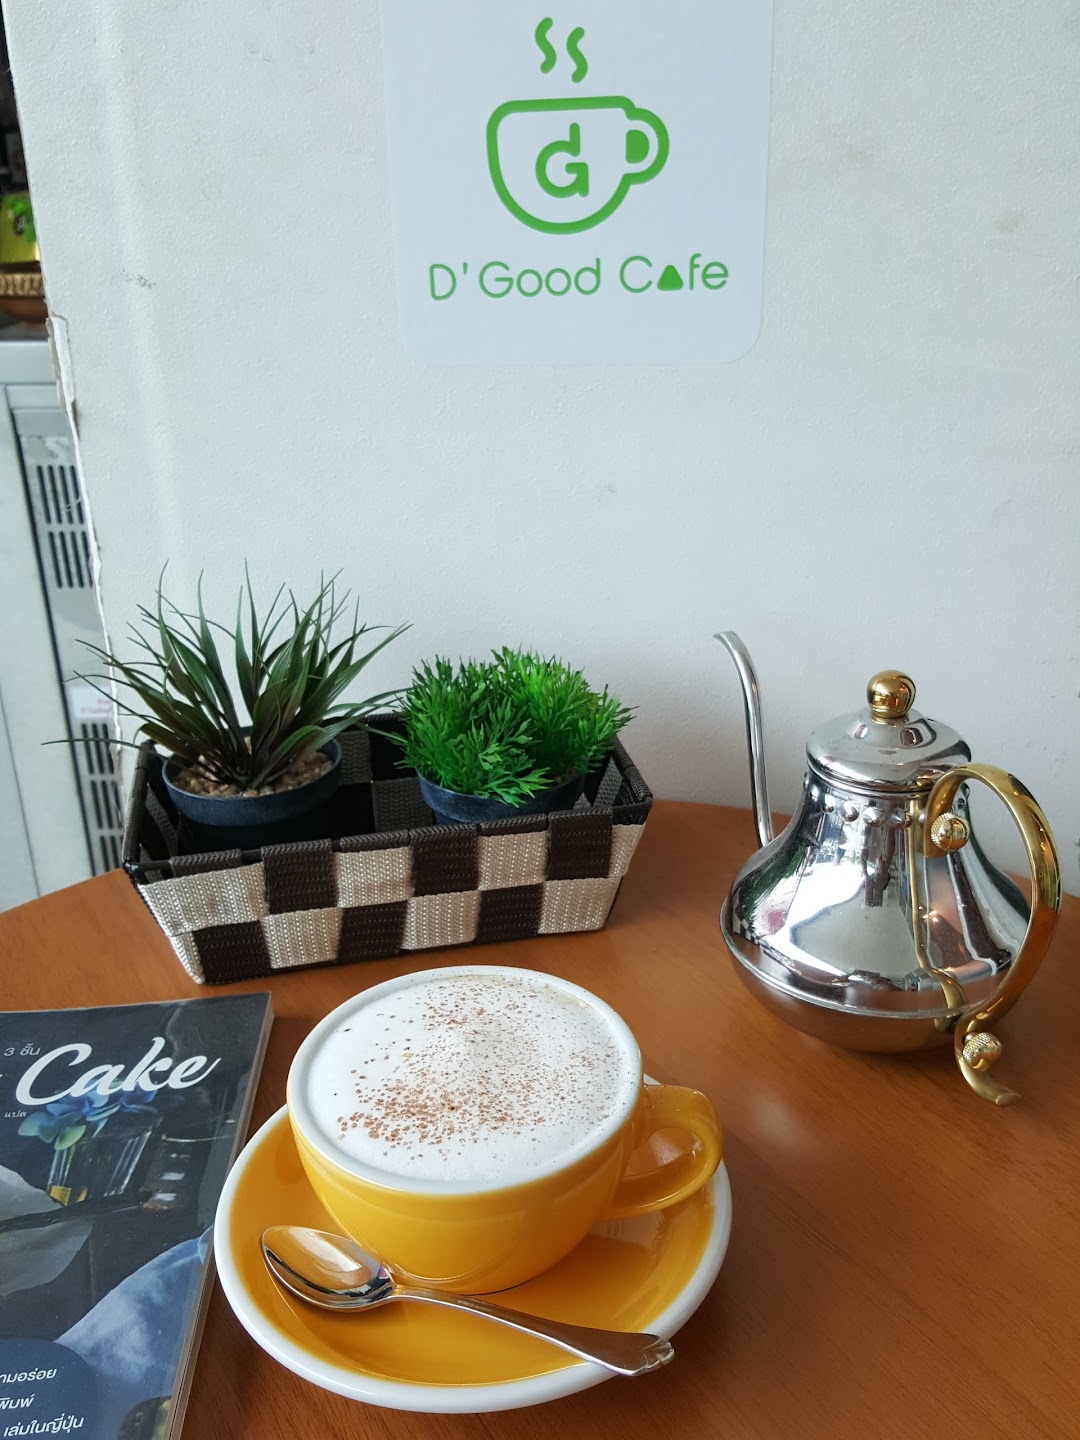 D Good Cafe